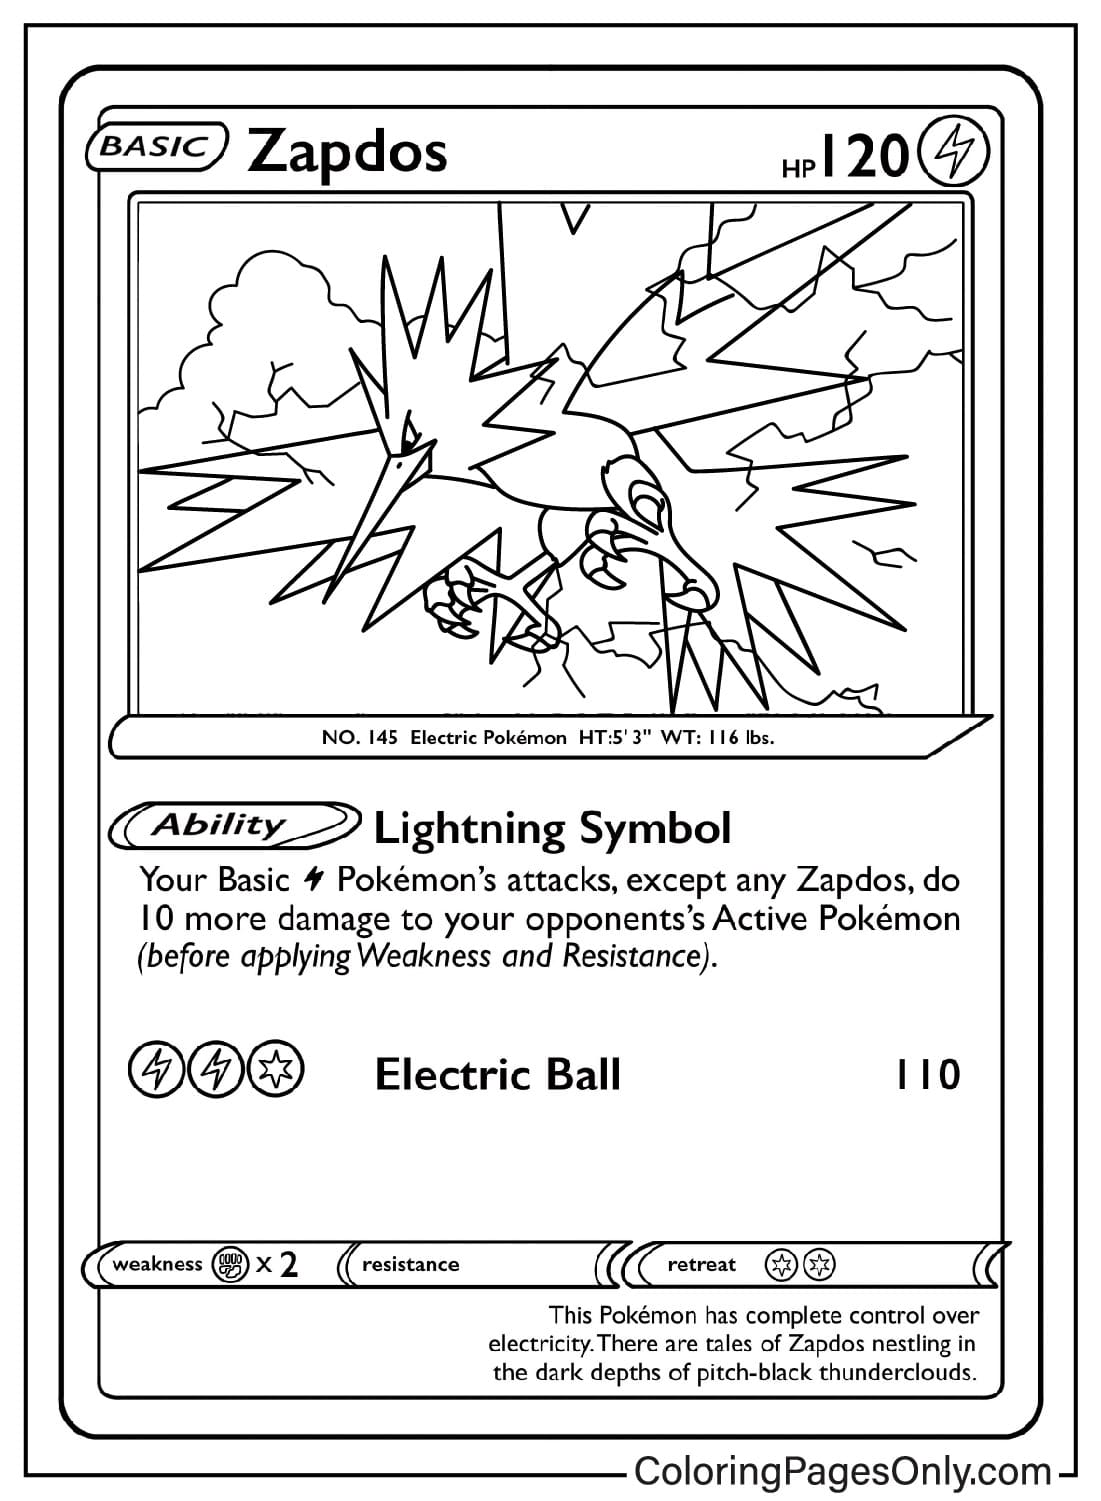 Карточка покемона с символом Запдоса из Pokemon Card